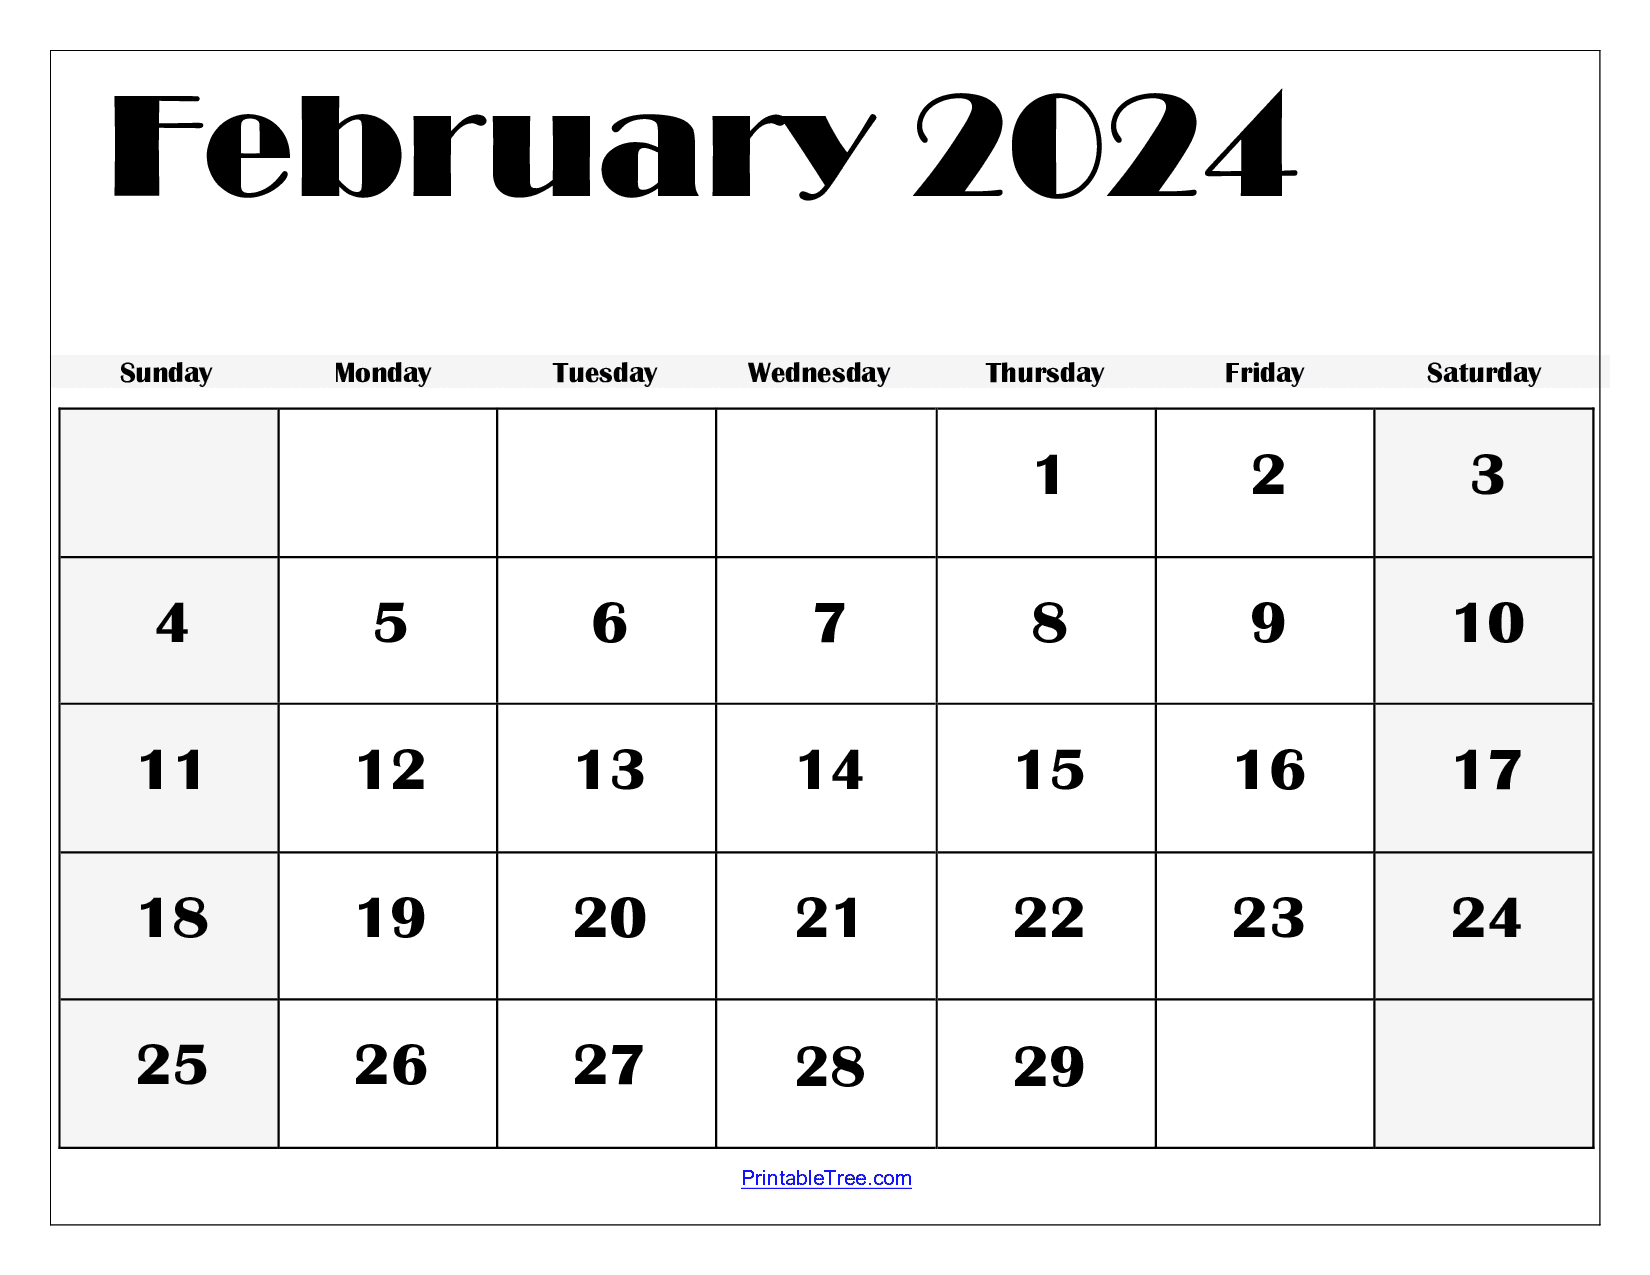 February 2024 Calendar Printable Pdf Template With Holidays for Free February Calendar 2024 Printable